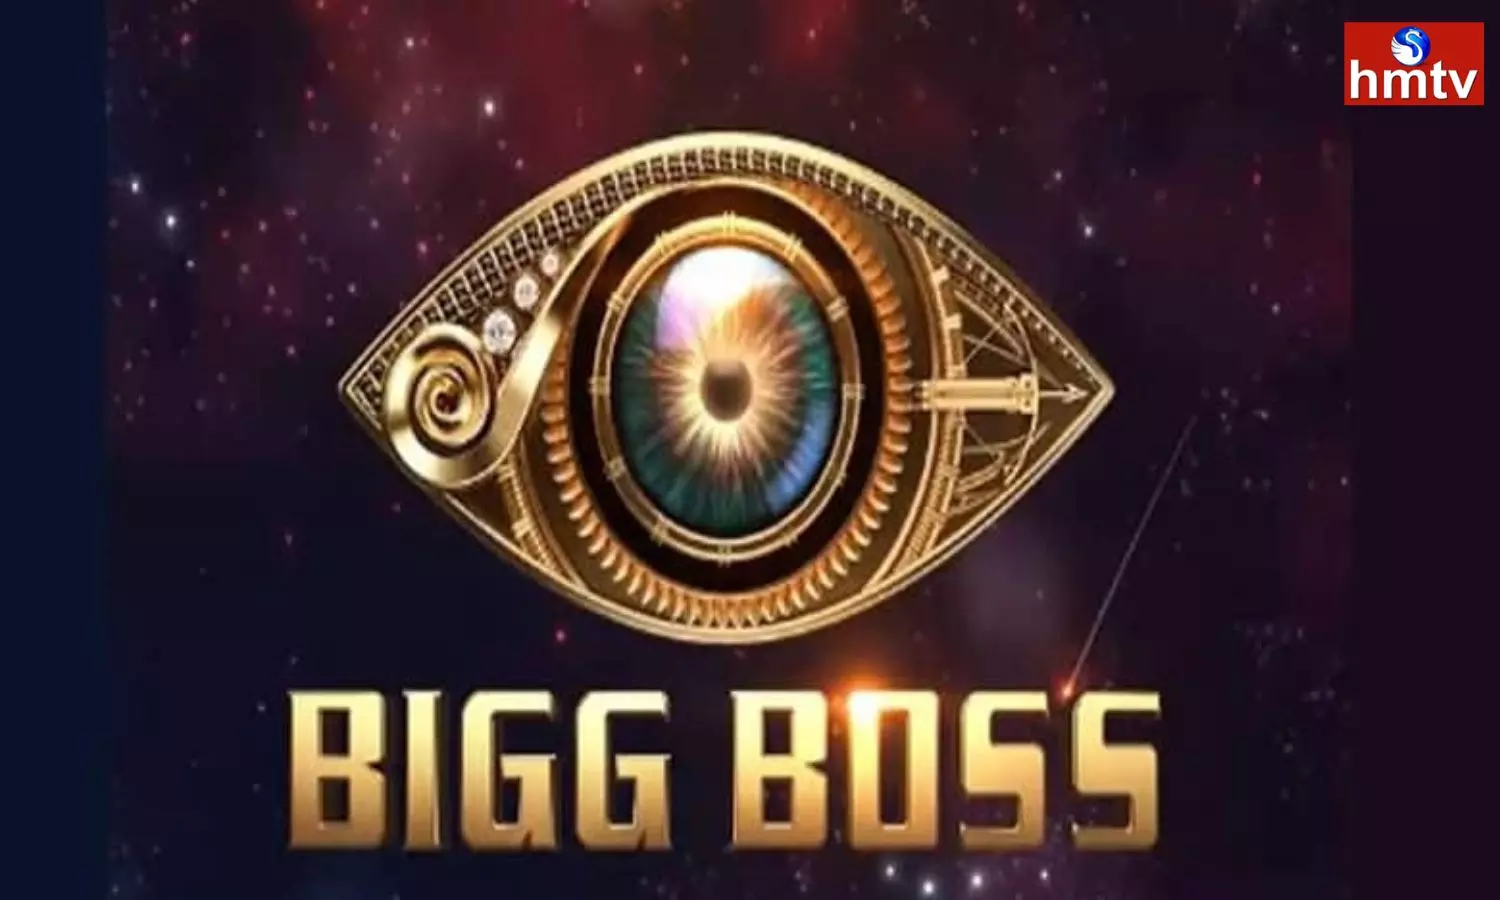 Bigg Boss Season 7 Will Start on Sunday, September 2nd or Will Start From September 9th Sunday Says Reports